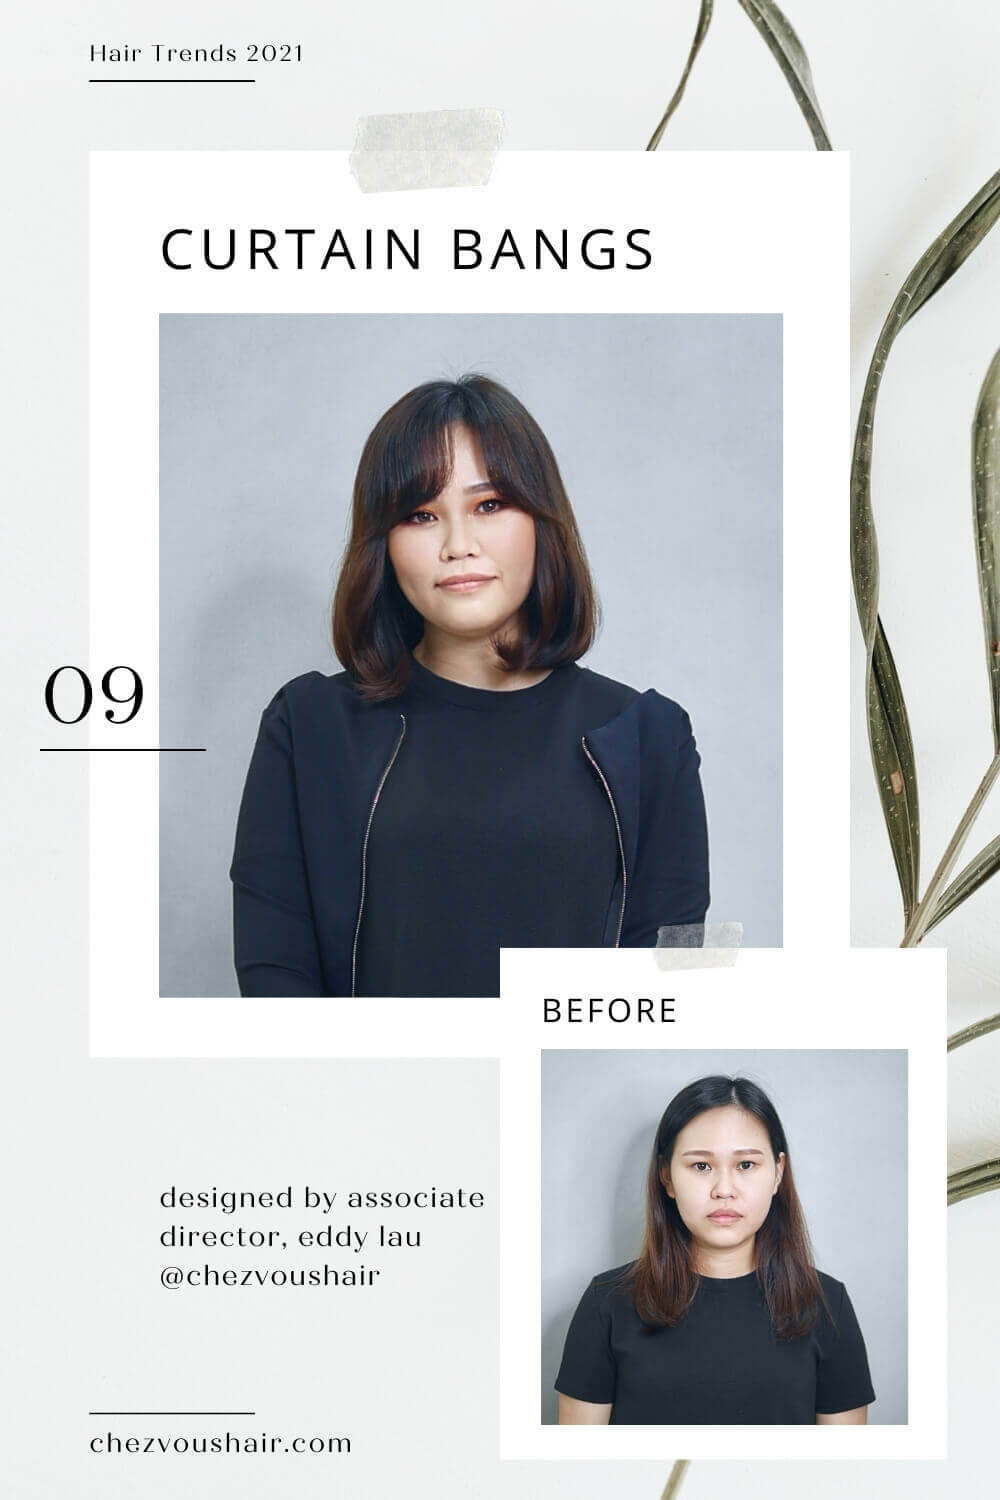 Hair Trends 2021: Revival of Curtain Bangs